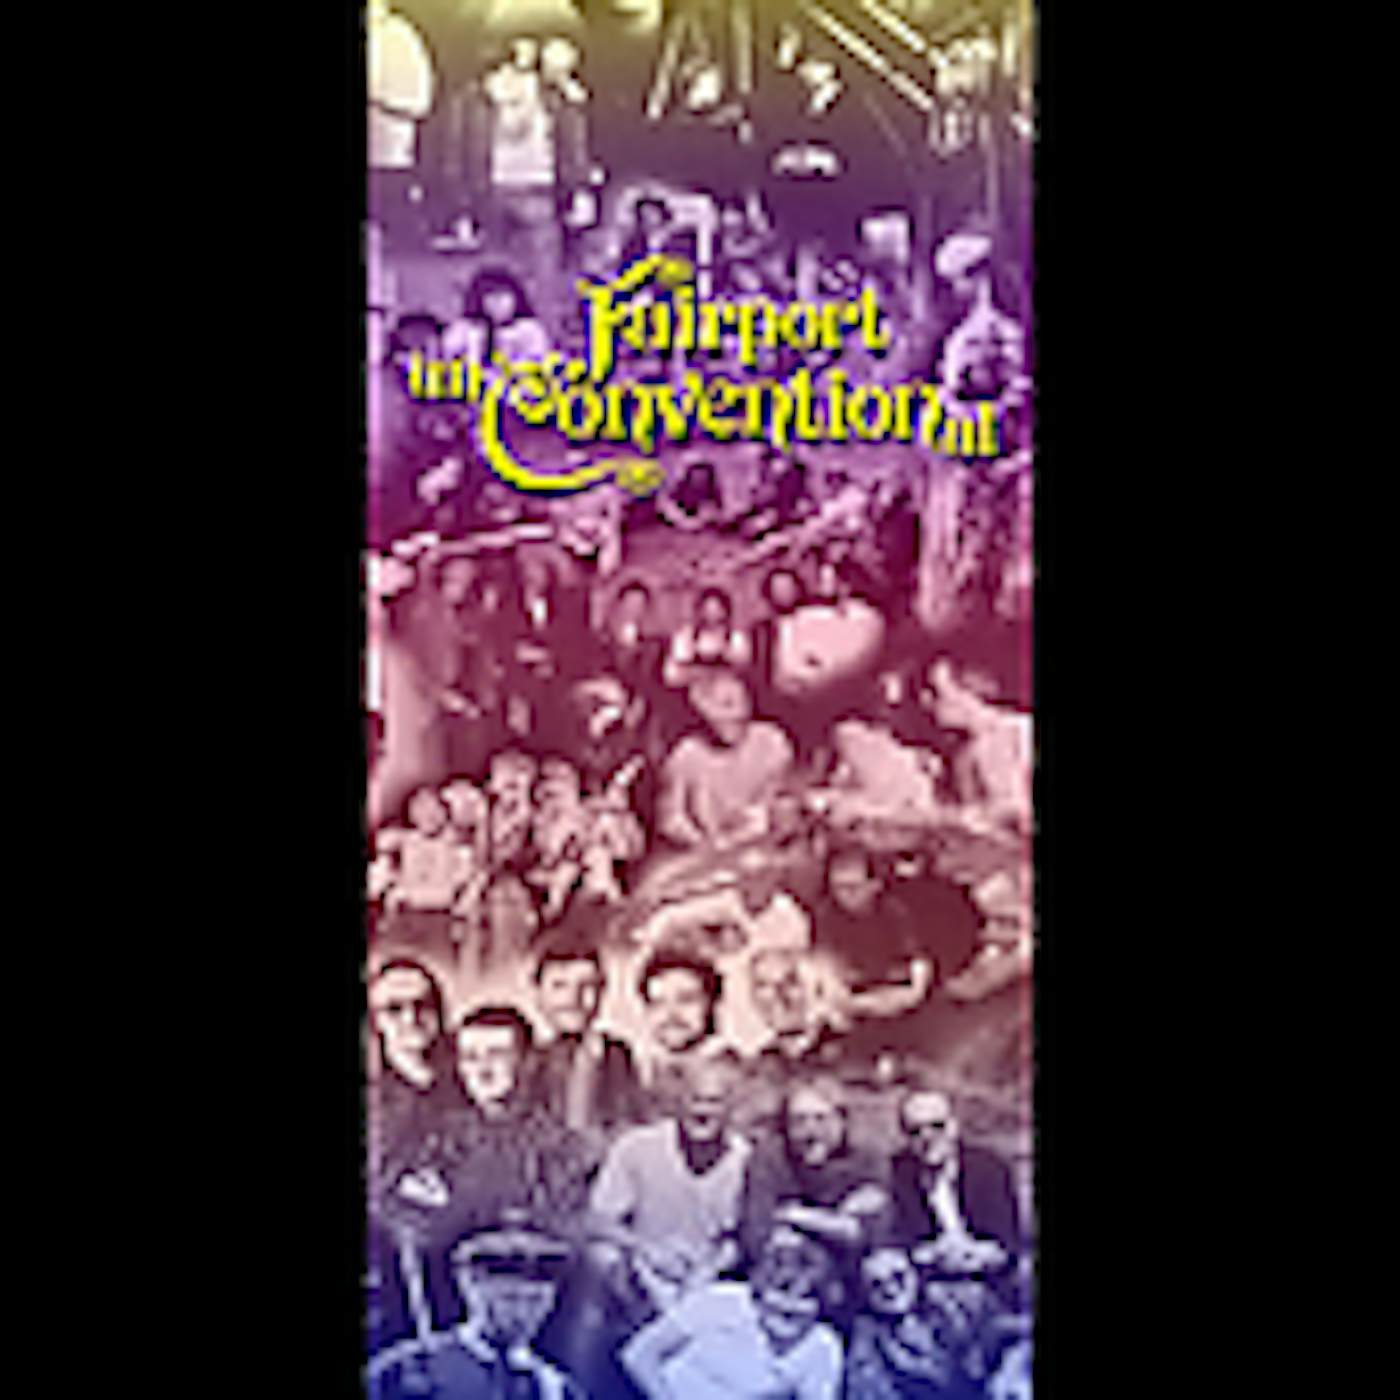 FAIRPORT CONVENTION CD